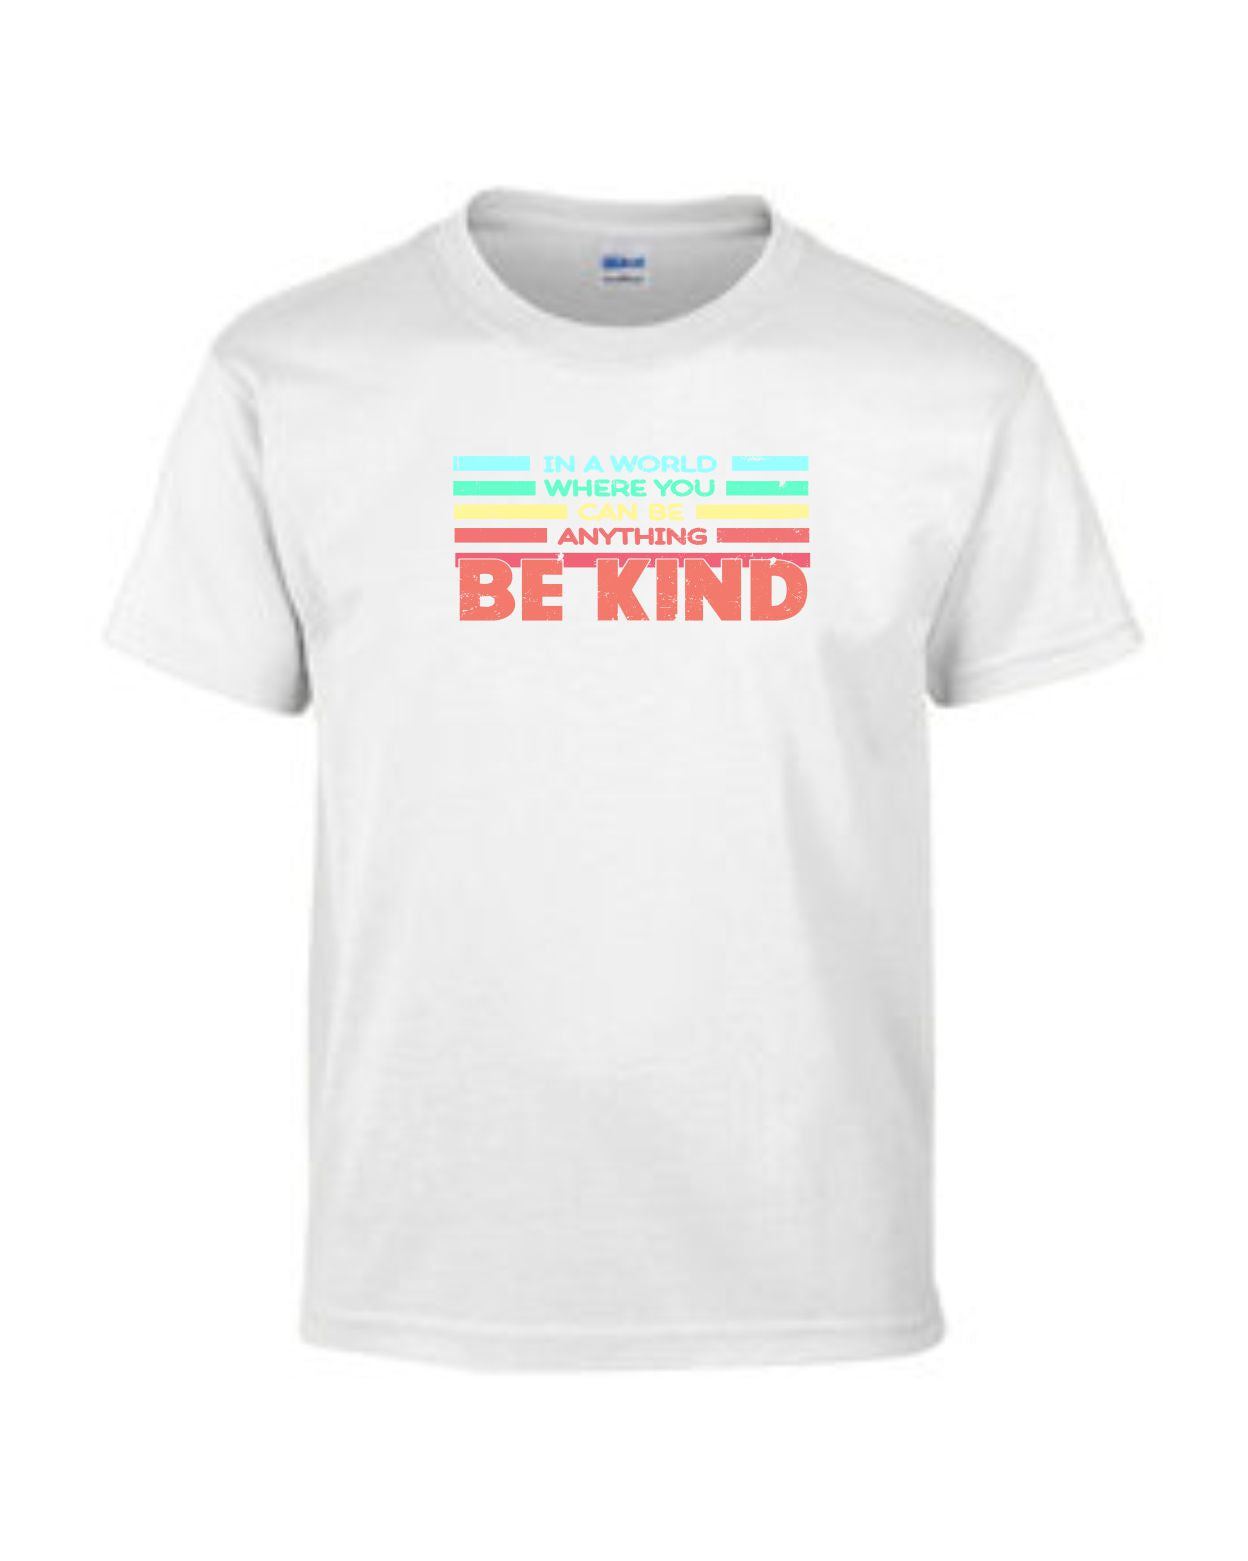 Be kind youth tshirt